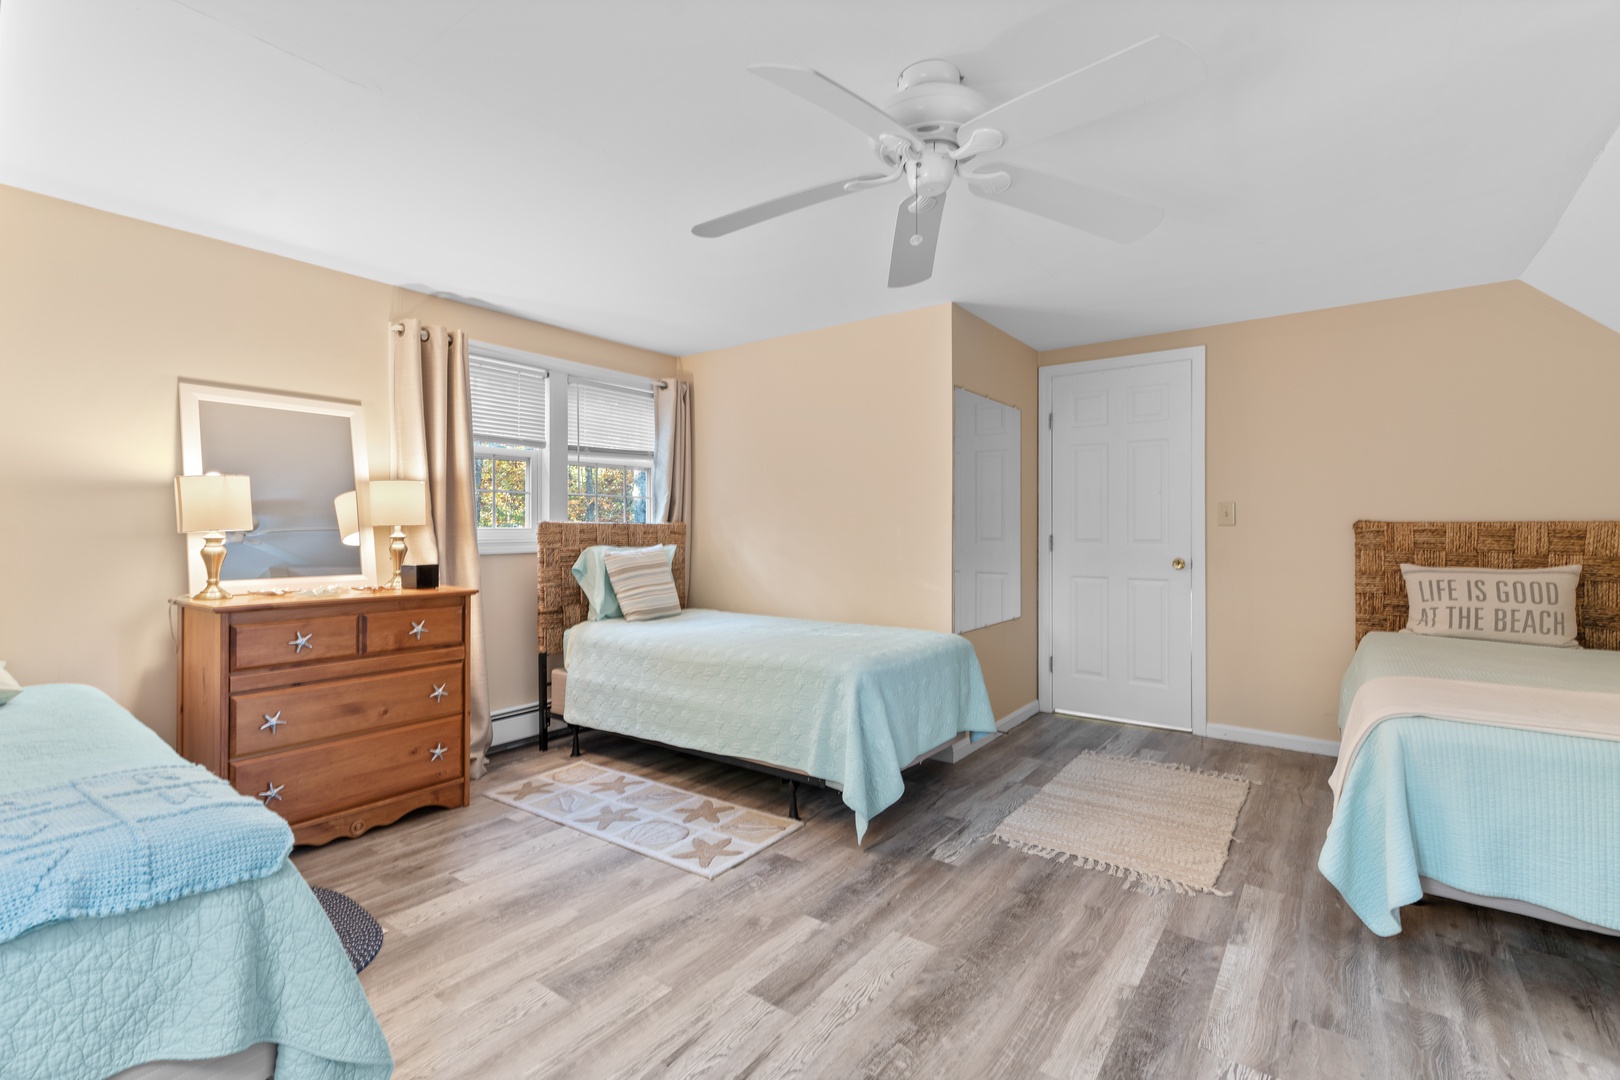 The final 2nd floor bedroom offers three cozy twin beds